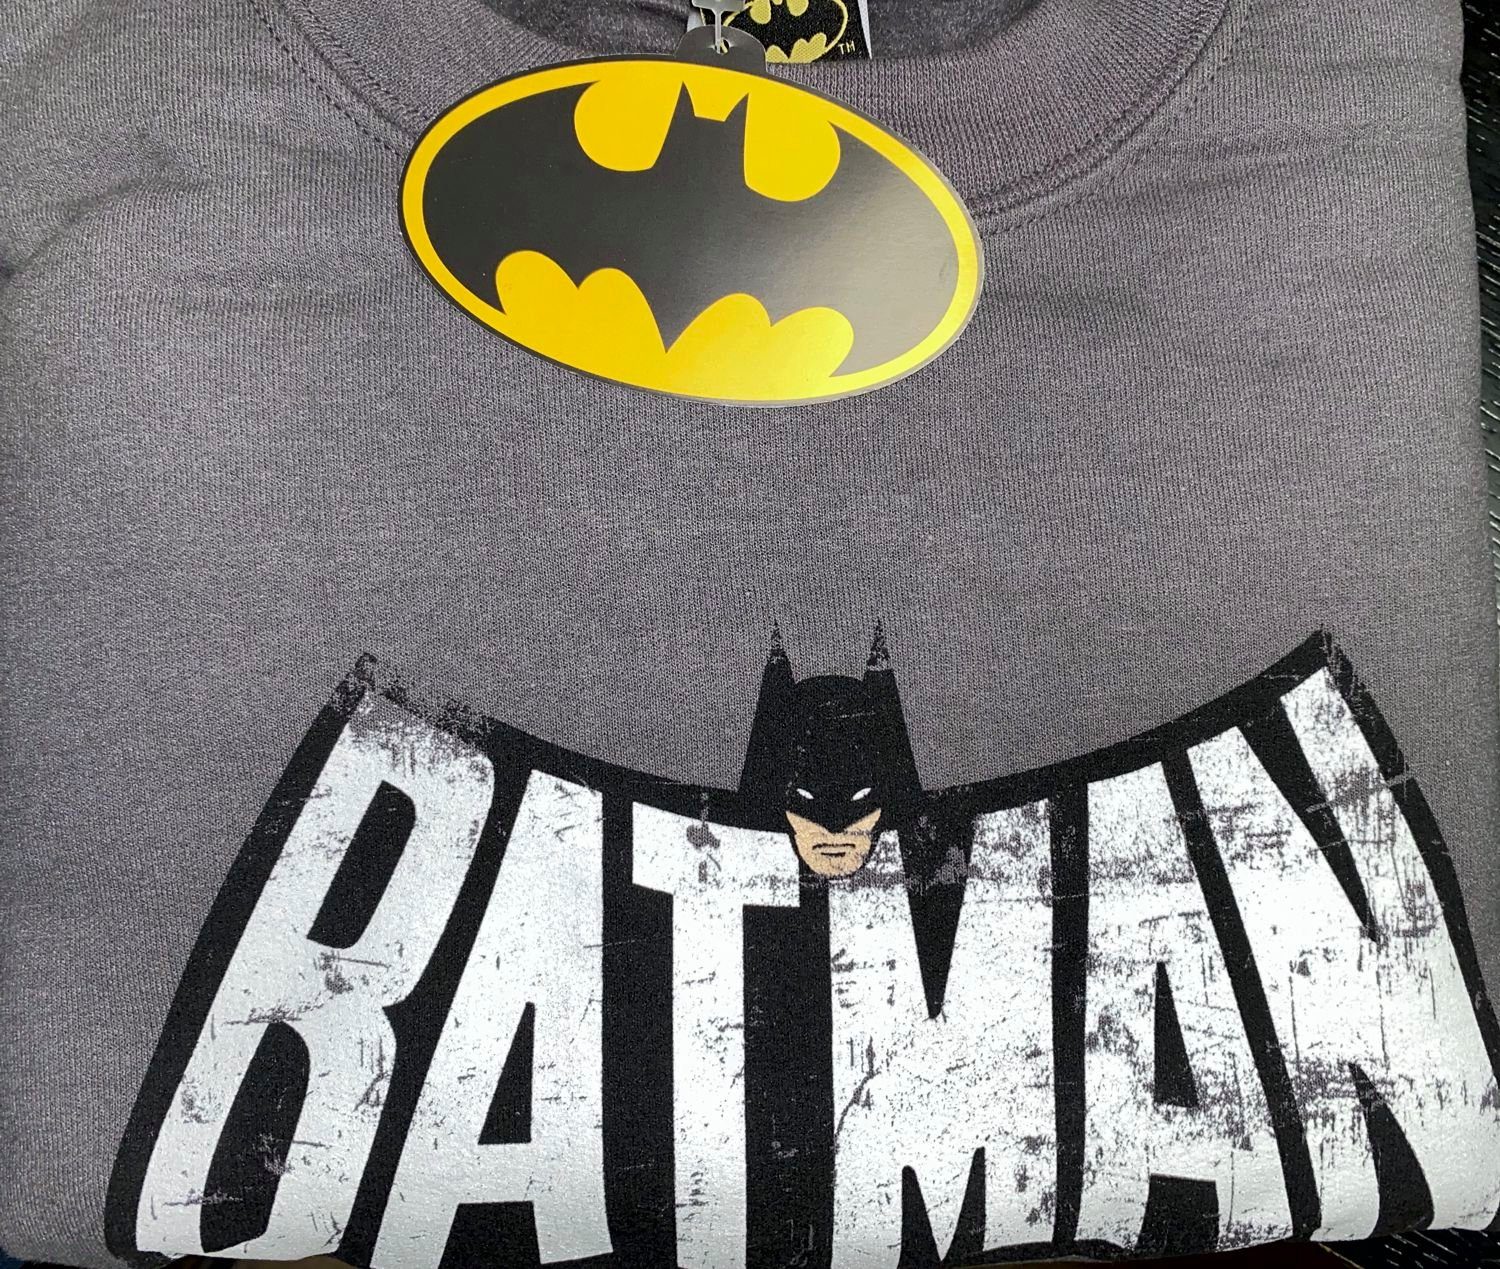 Batman Sweatshirt BATMAN SWEATSHIRT Gr. dunkelgrau Pulli solid Sweater Erwachsene Pullover XXL